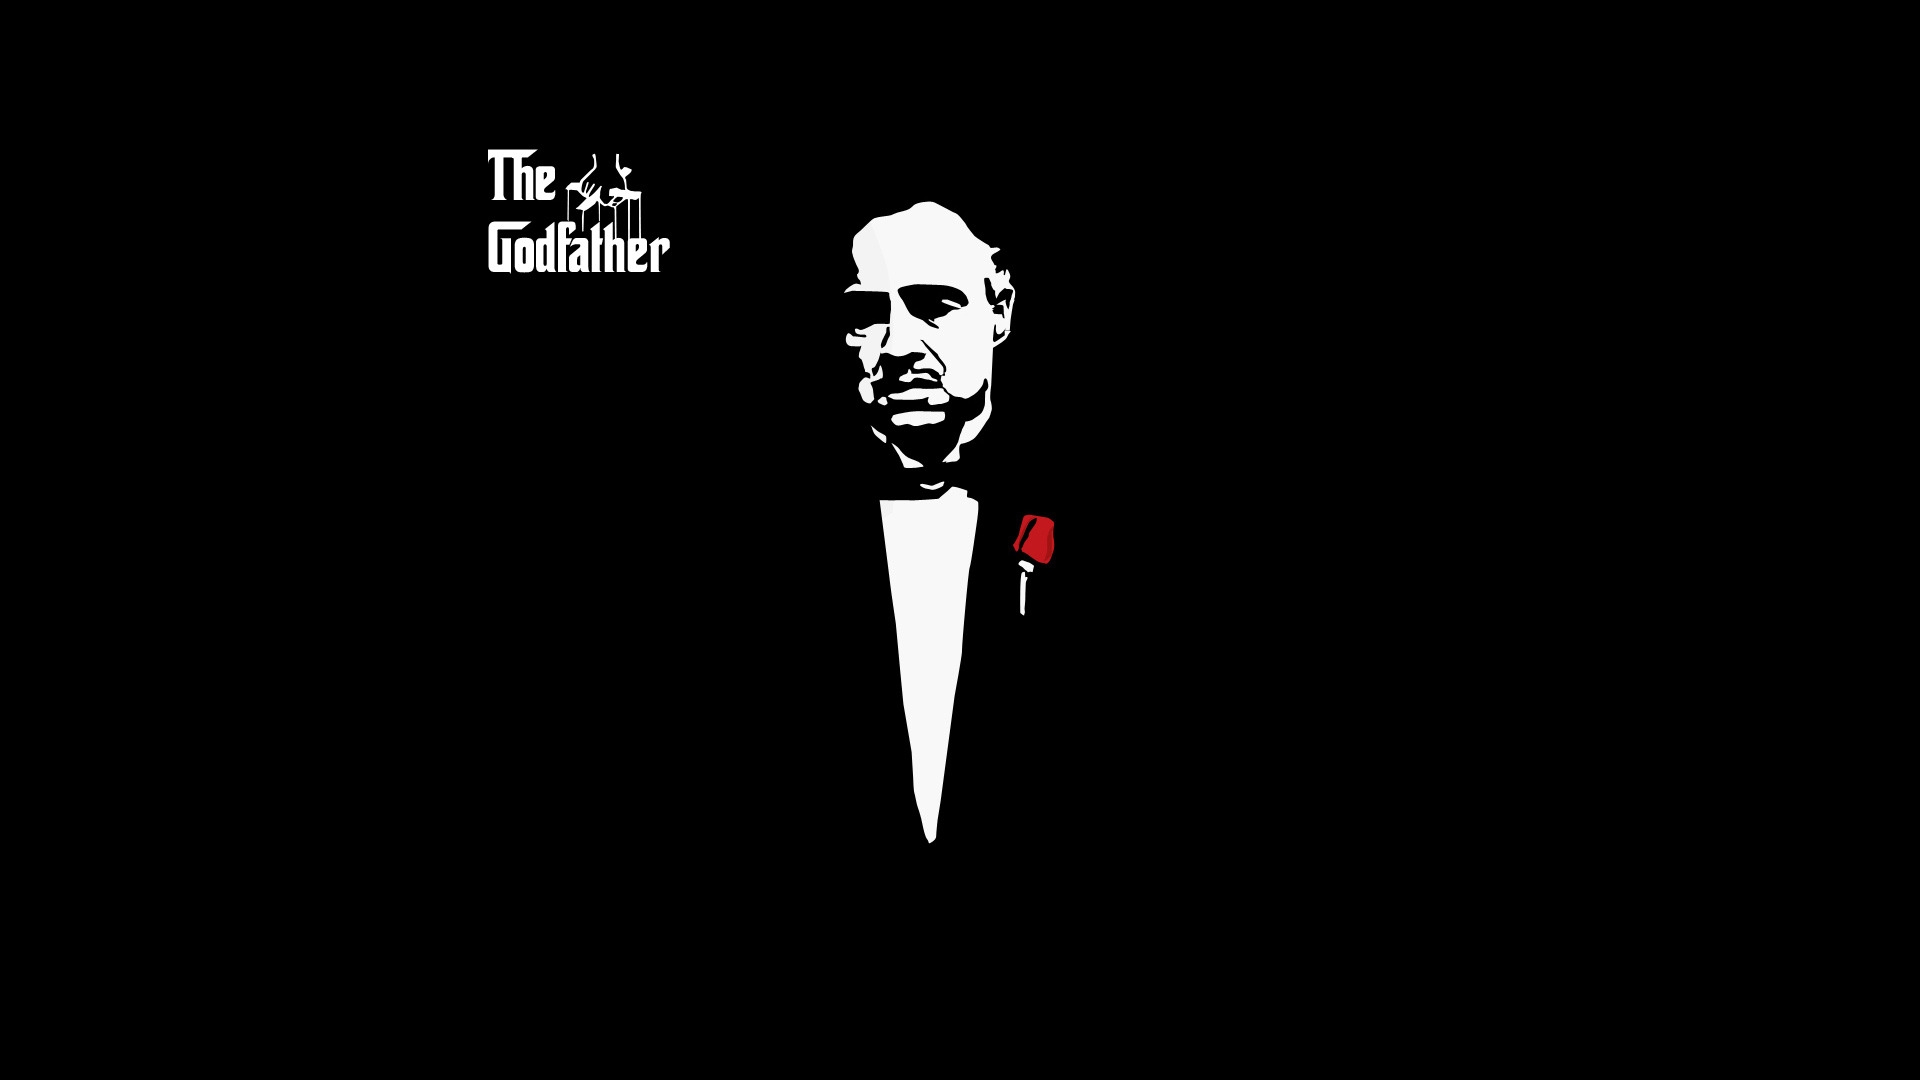 Godfather Fan art for 1920 x 1080 HDTV 1080p resolution